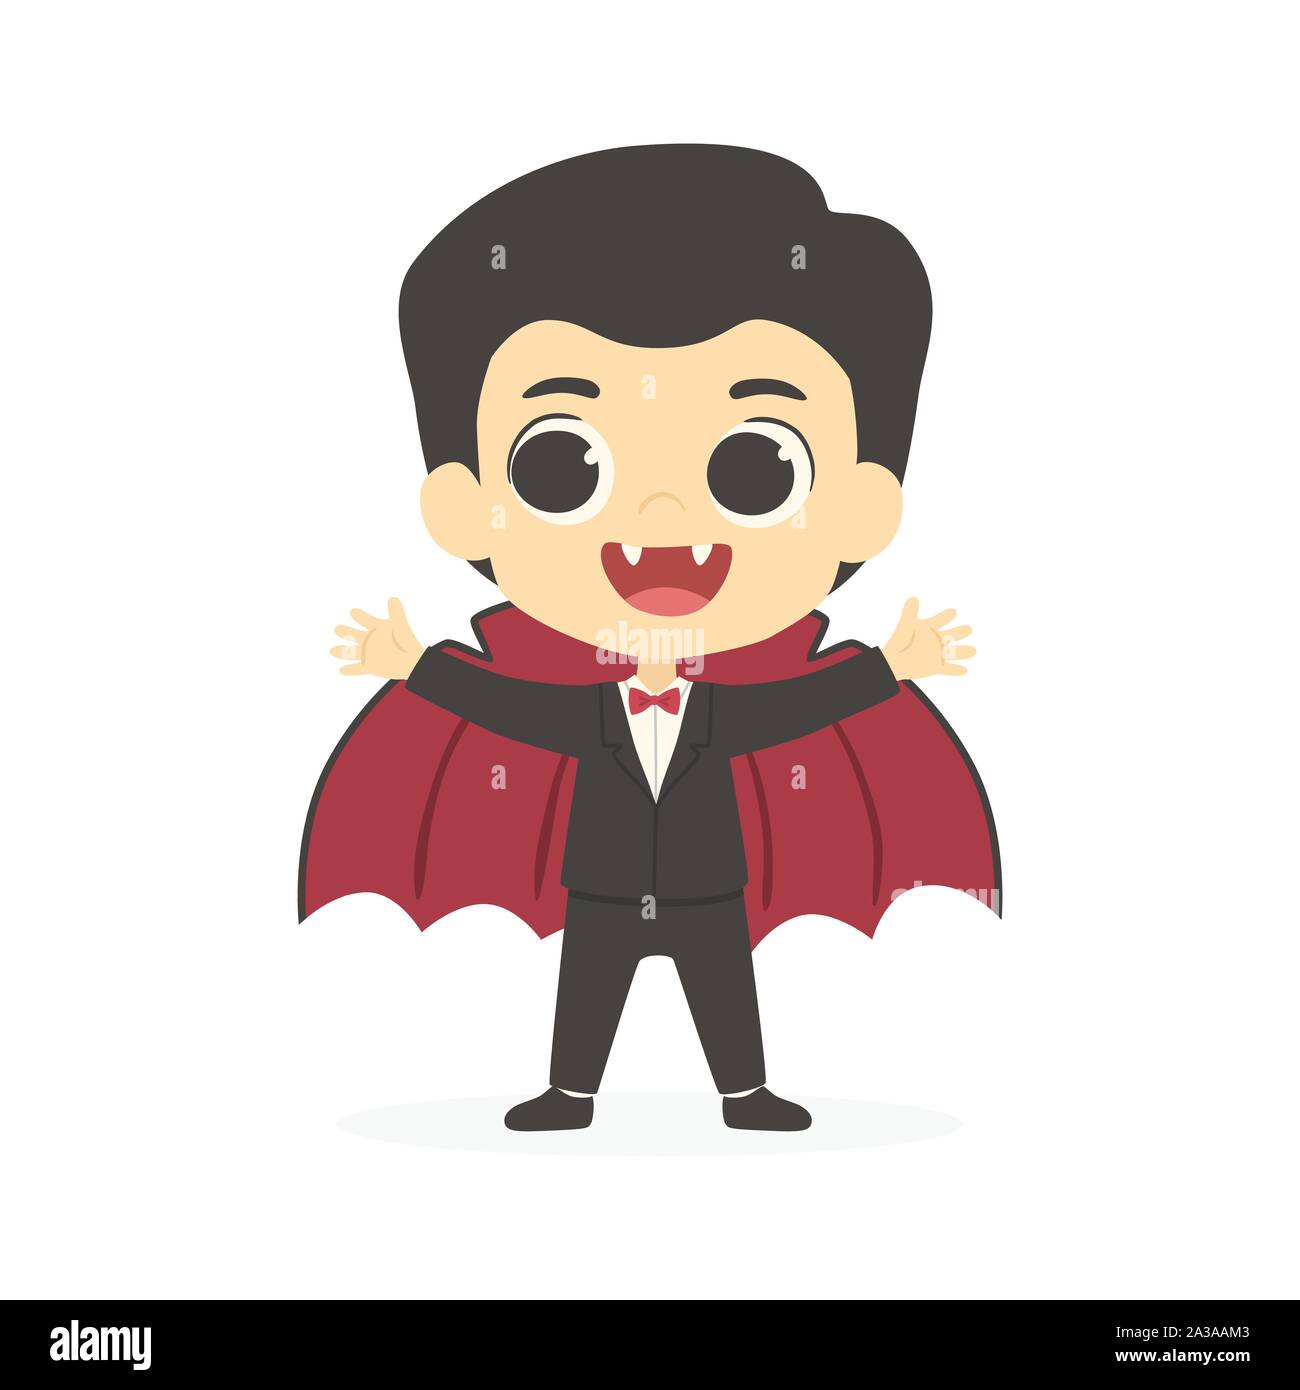 Halloween Cute Dracula Vampire Boy Costume Vector Stock Vector Image ...